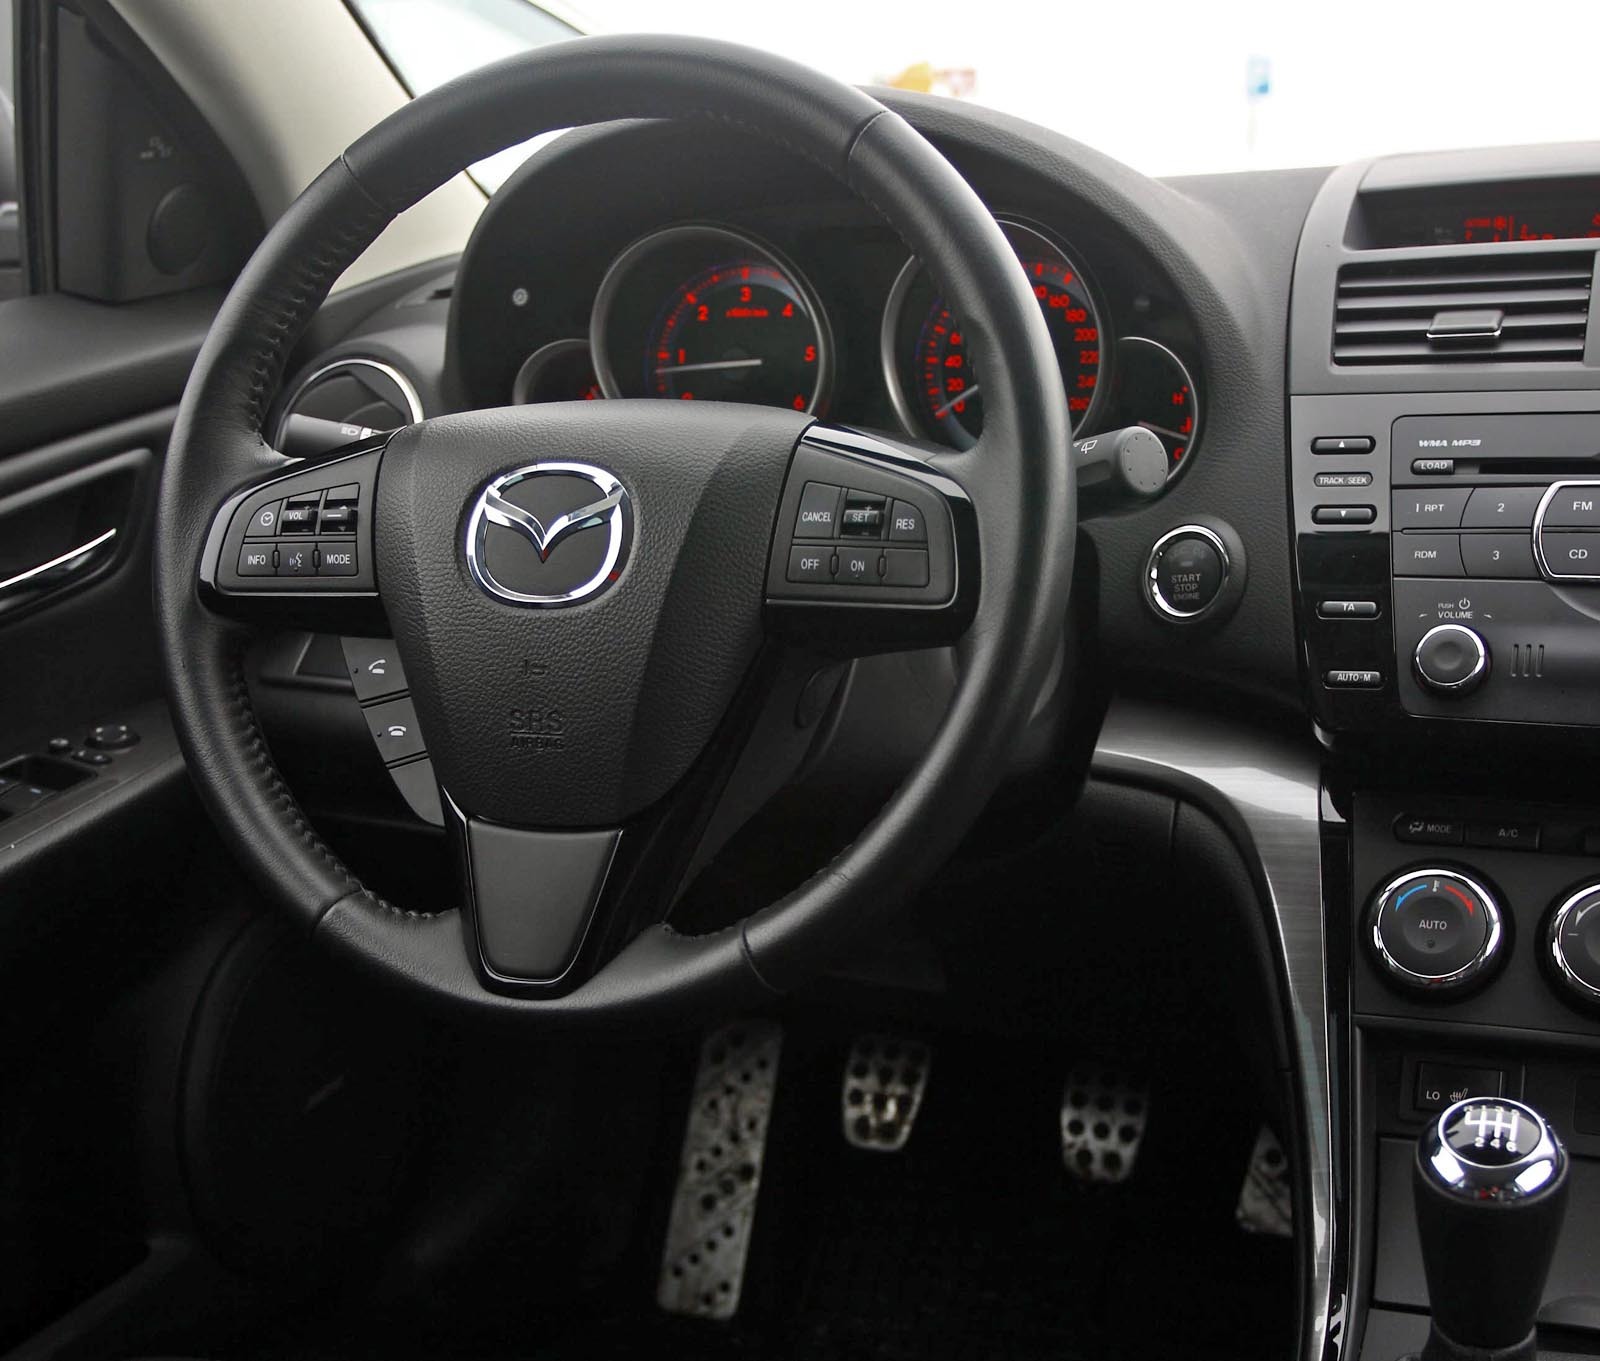 Mazda6 are cel mai bun comportament rutier: directie, timonerie, suspensie, frane